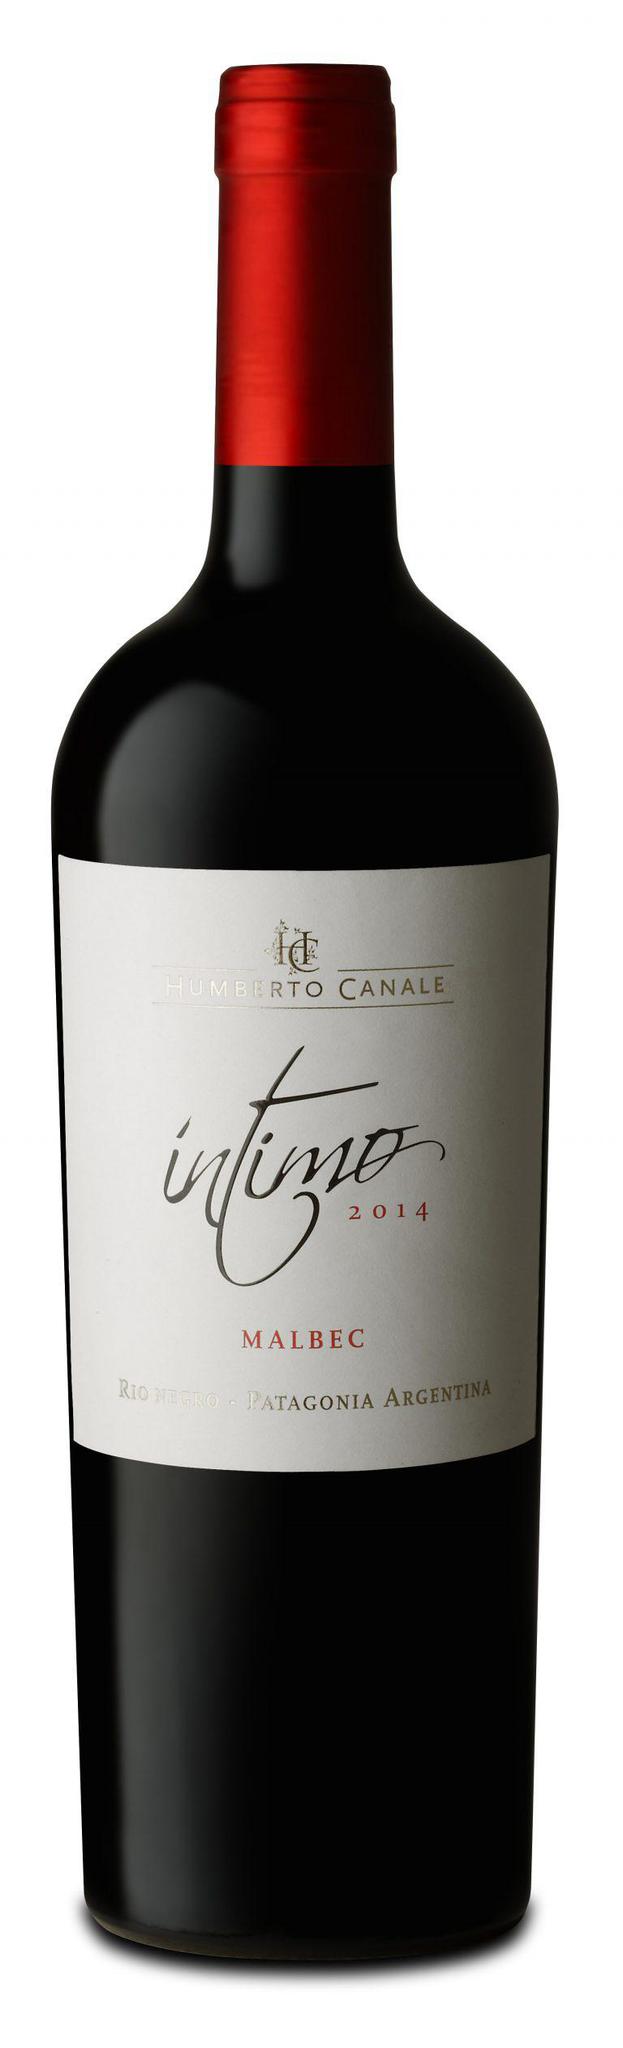 Humberto Canale Intimo Malbec - 750 ml bottle